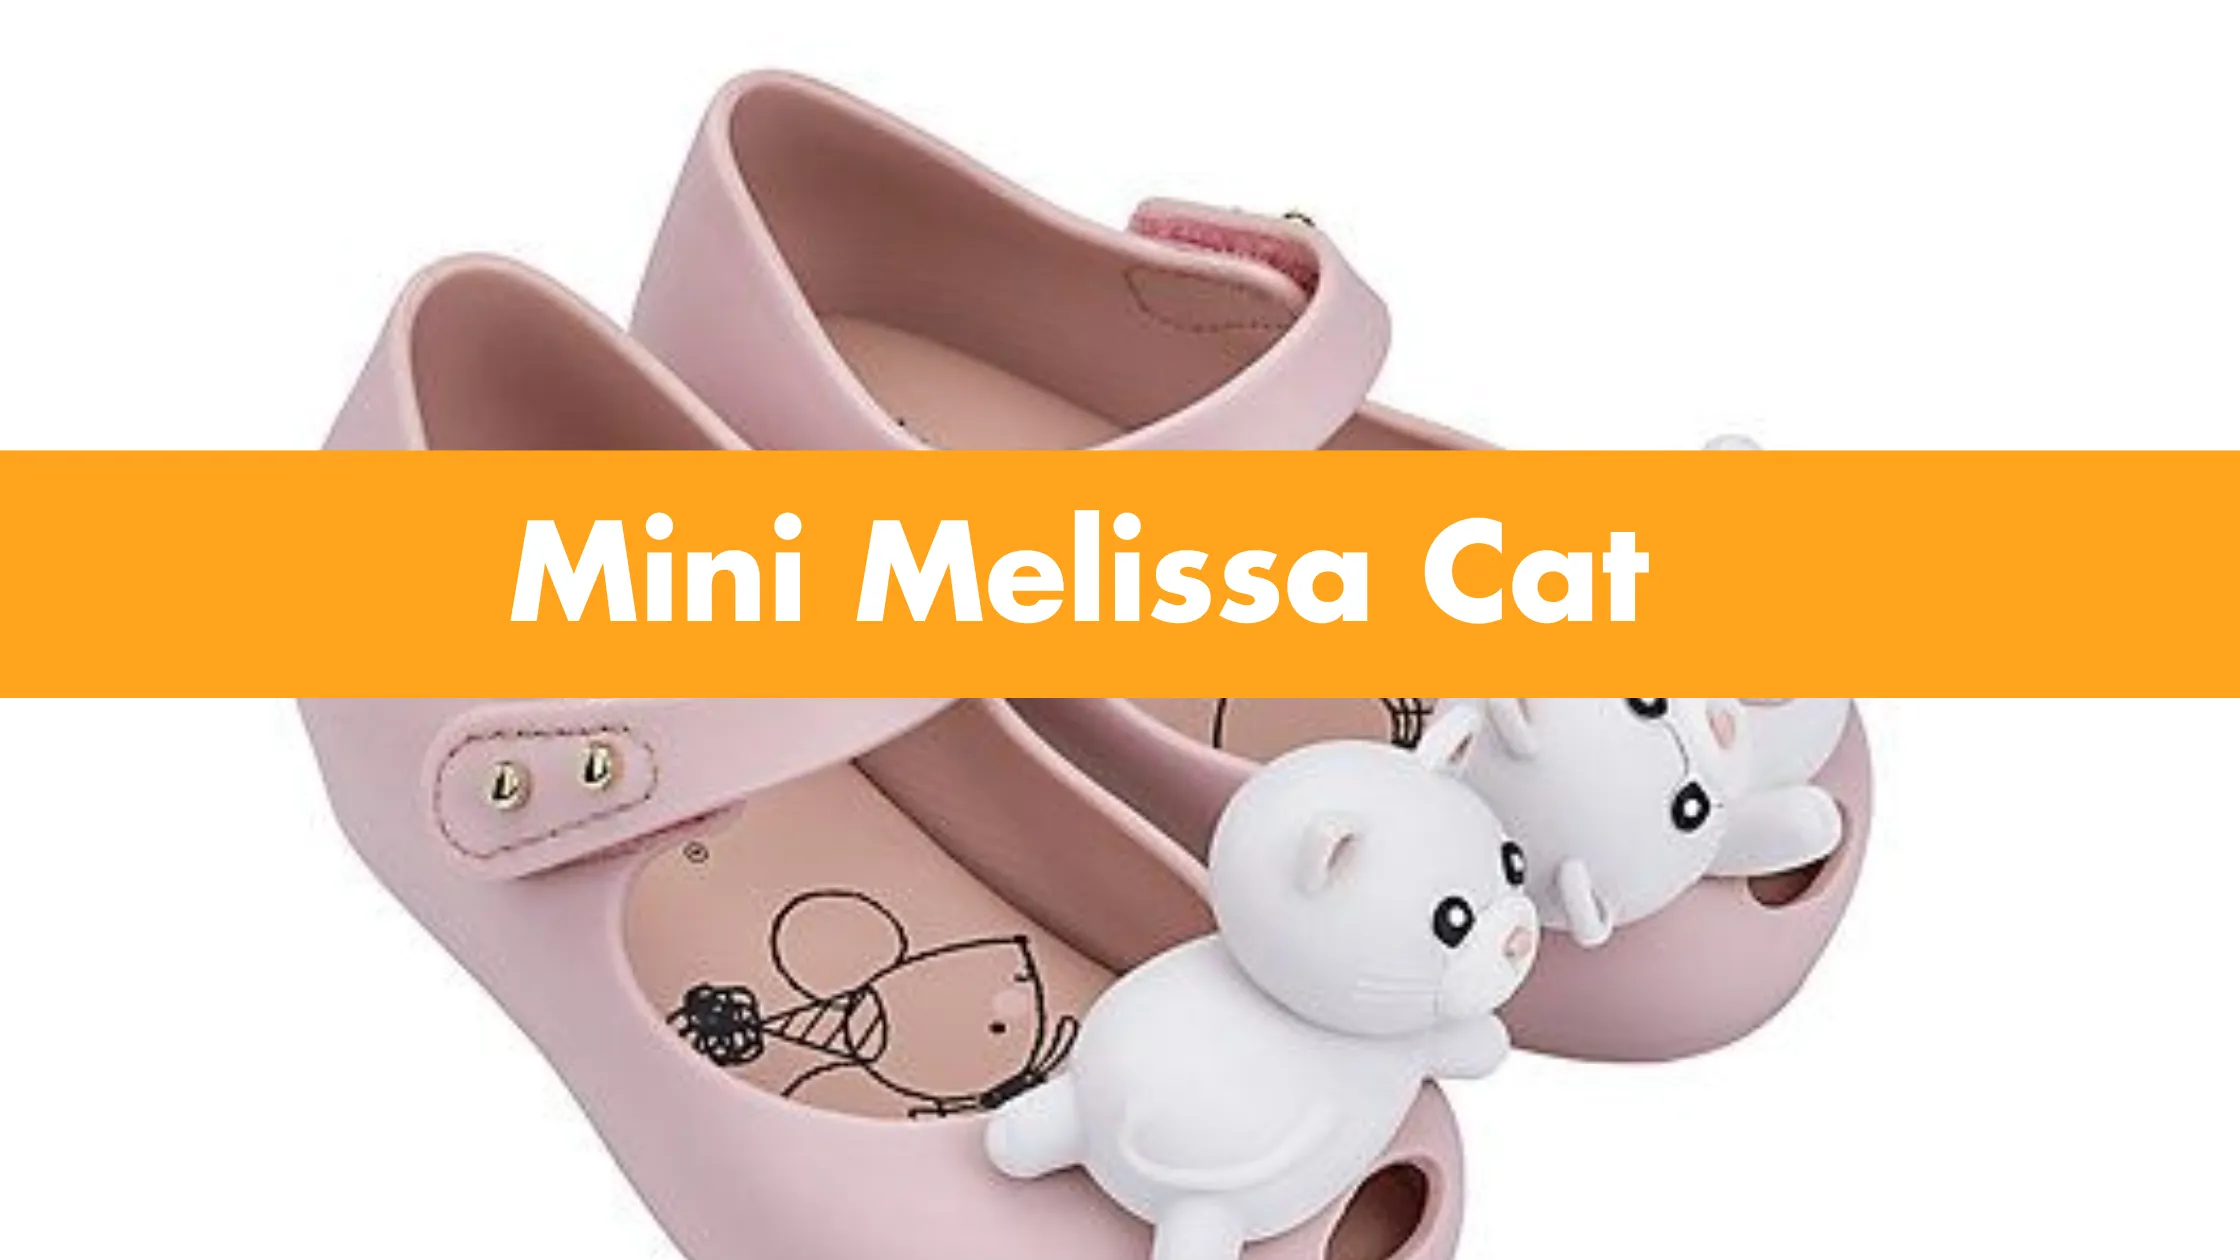 Mini Melissa Cat Review